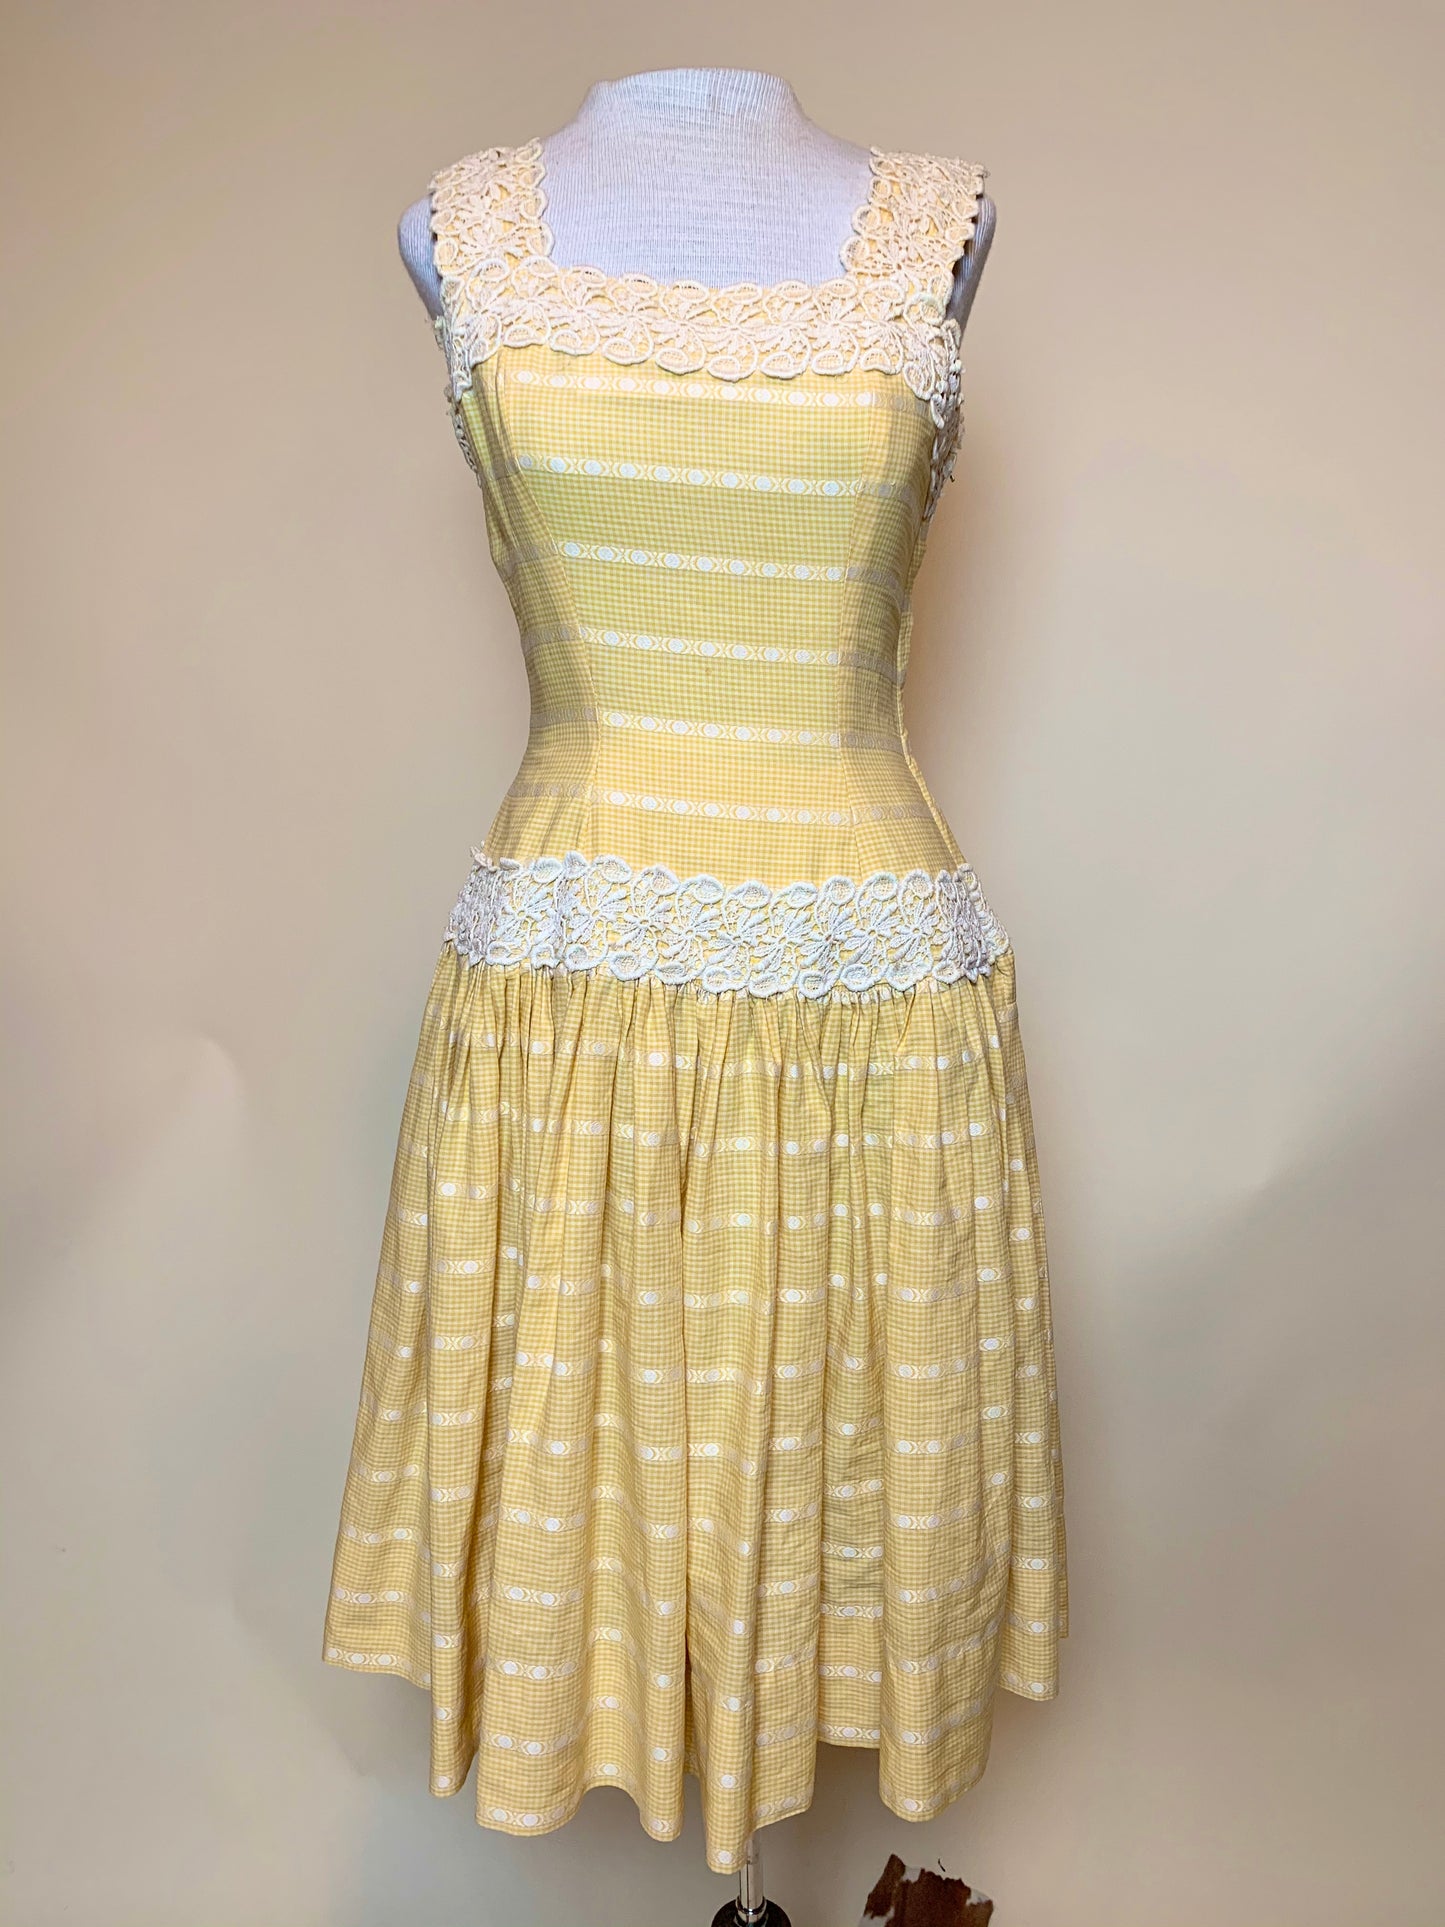 1950s Handmade Marigold & Lace Summer Dress (S)